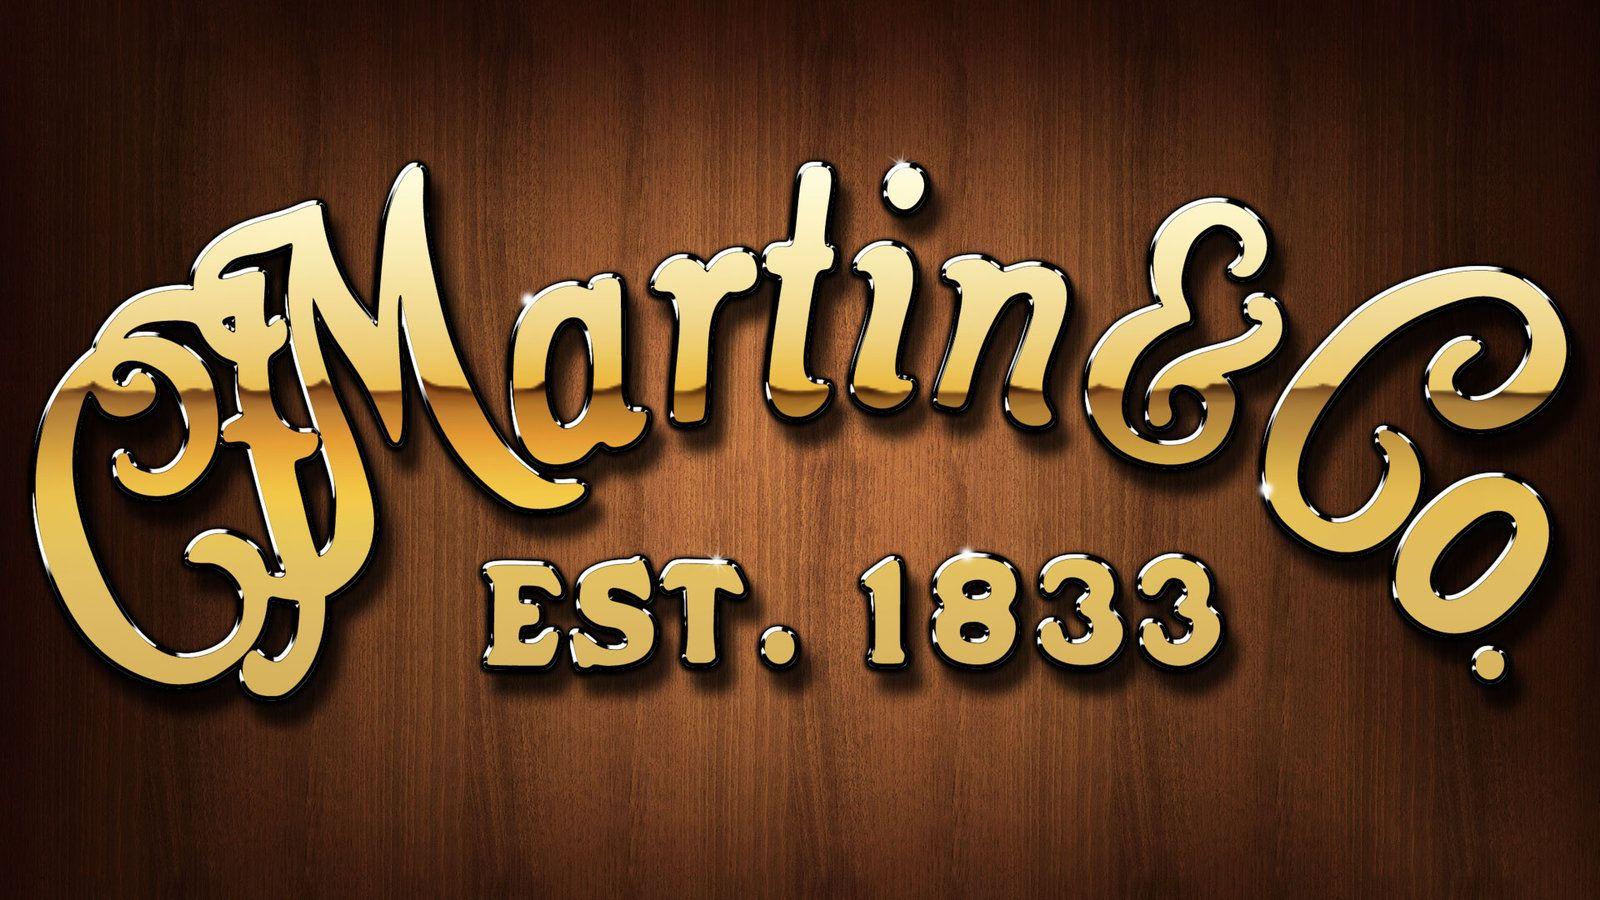 Martin guitar logo